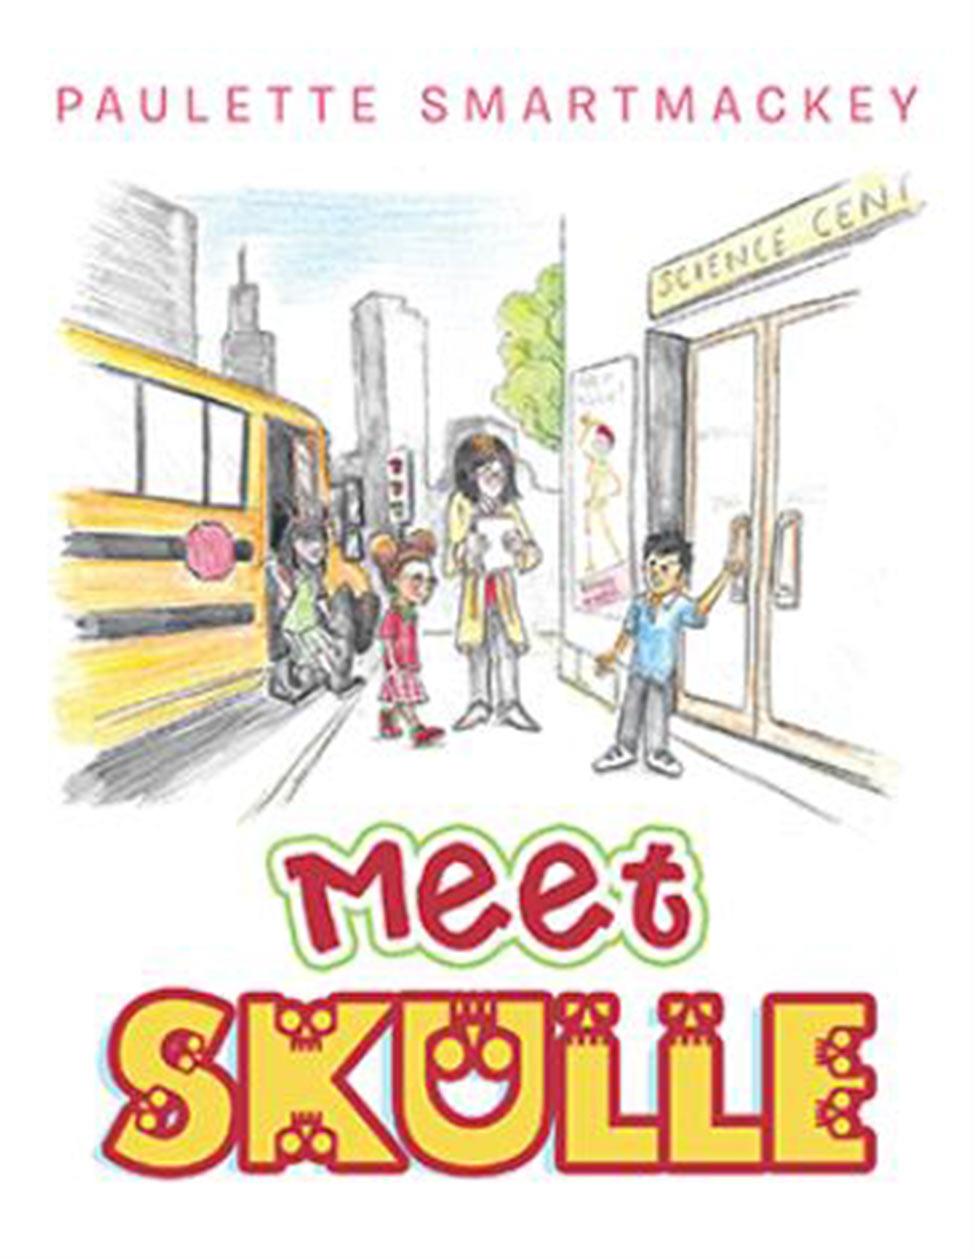 Pace University's Chemistry alum Paulette Smart's book Meet Skulle